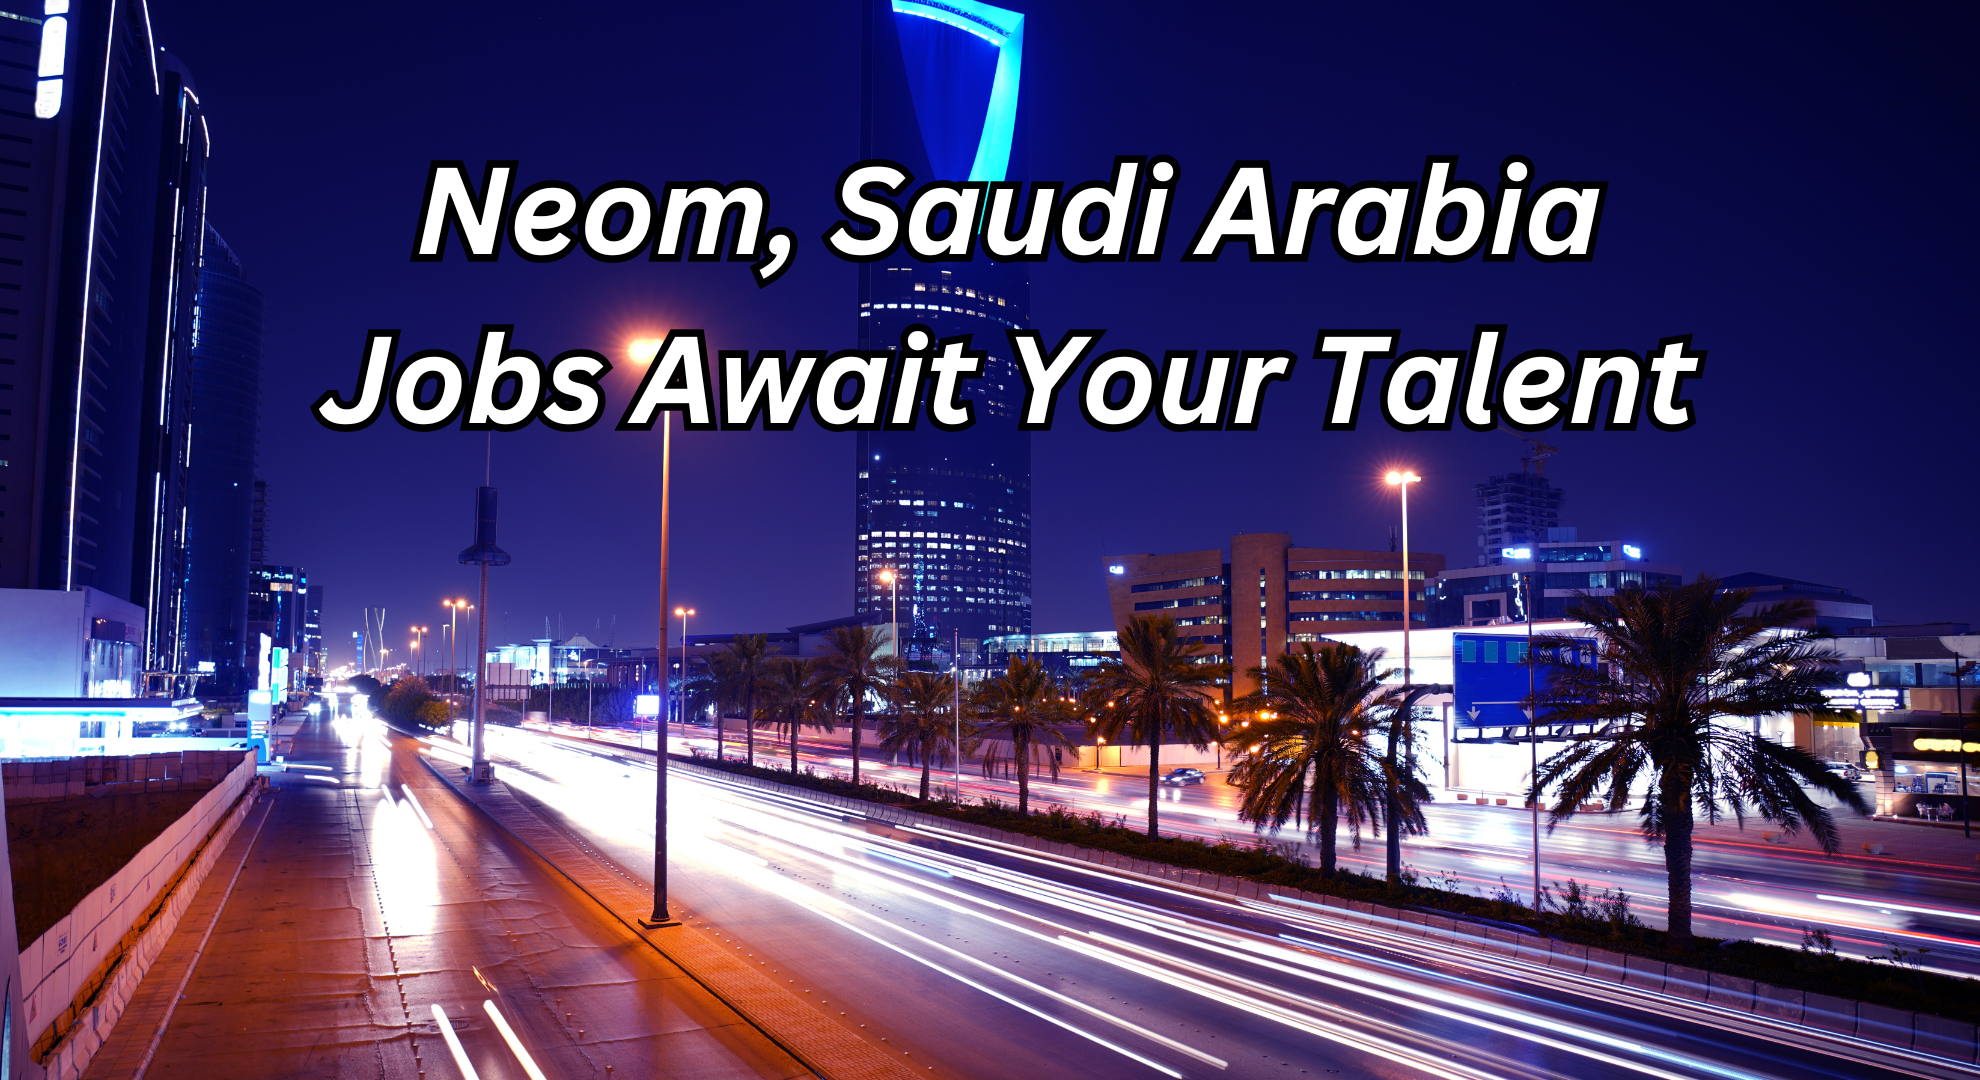 Neom, Saudi Arabia Jobs Await Your Talent